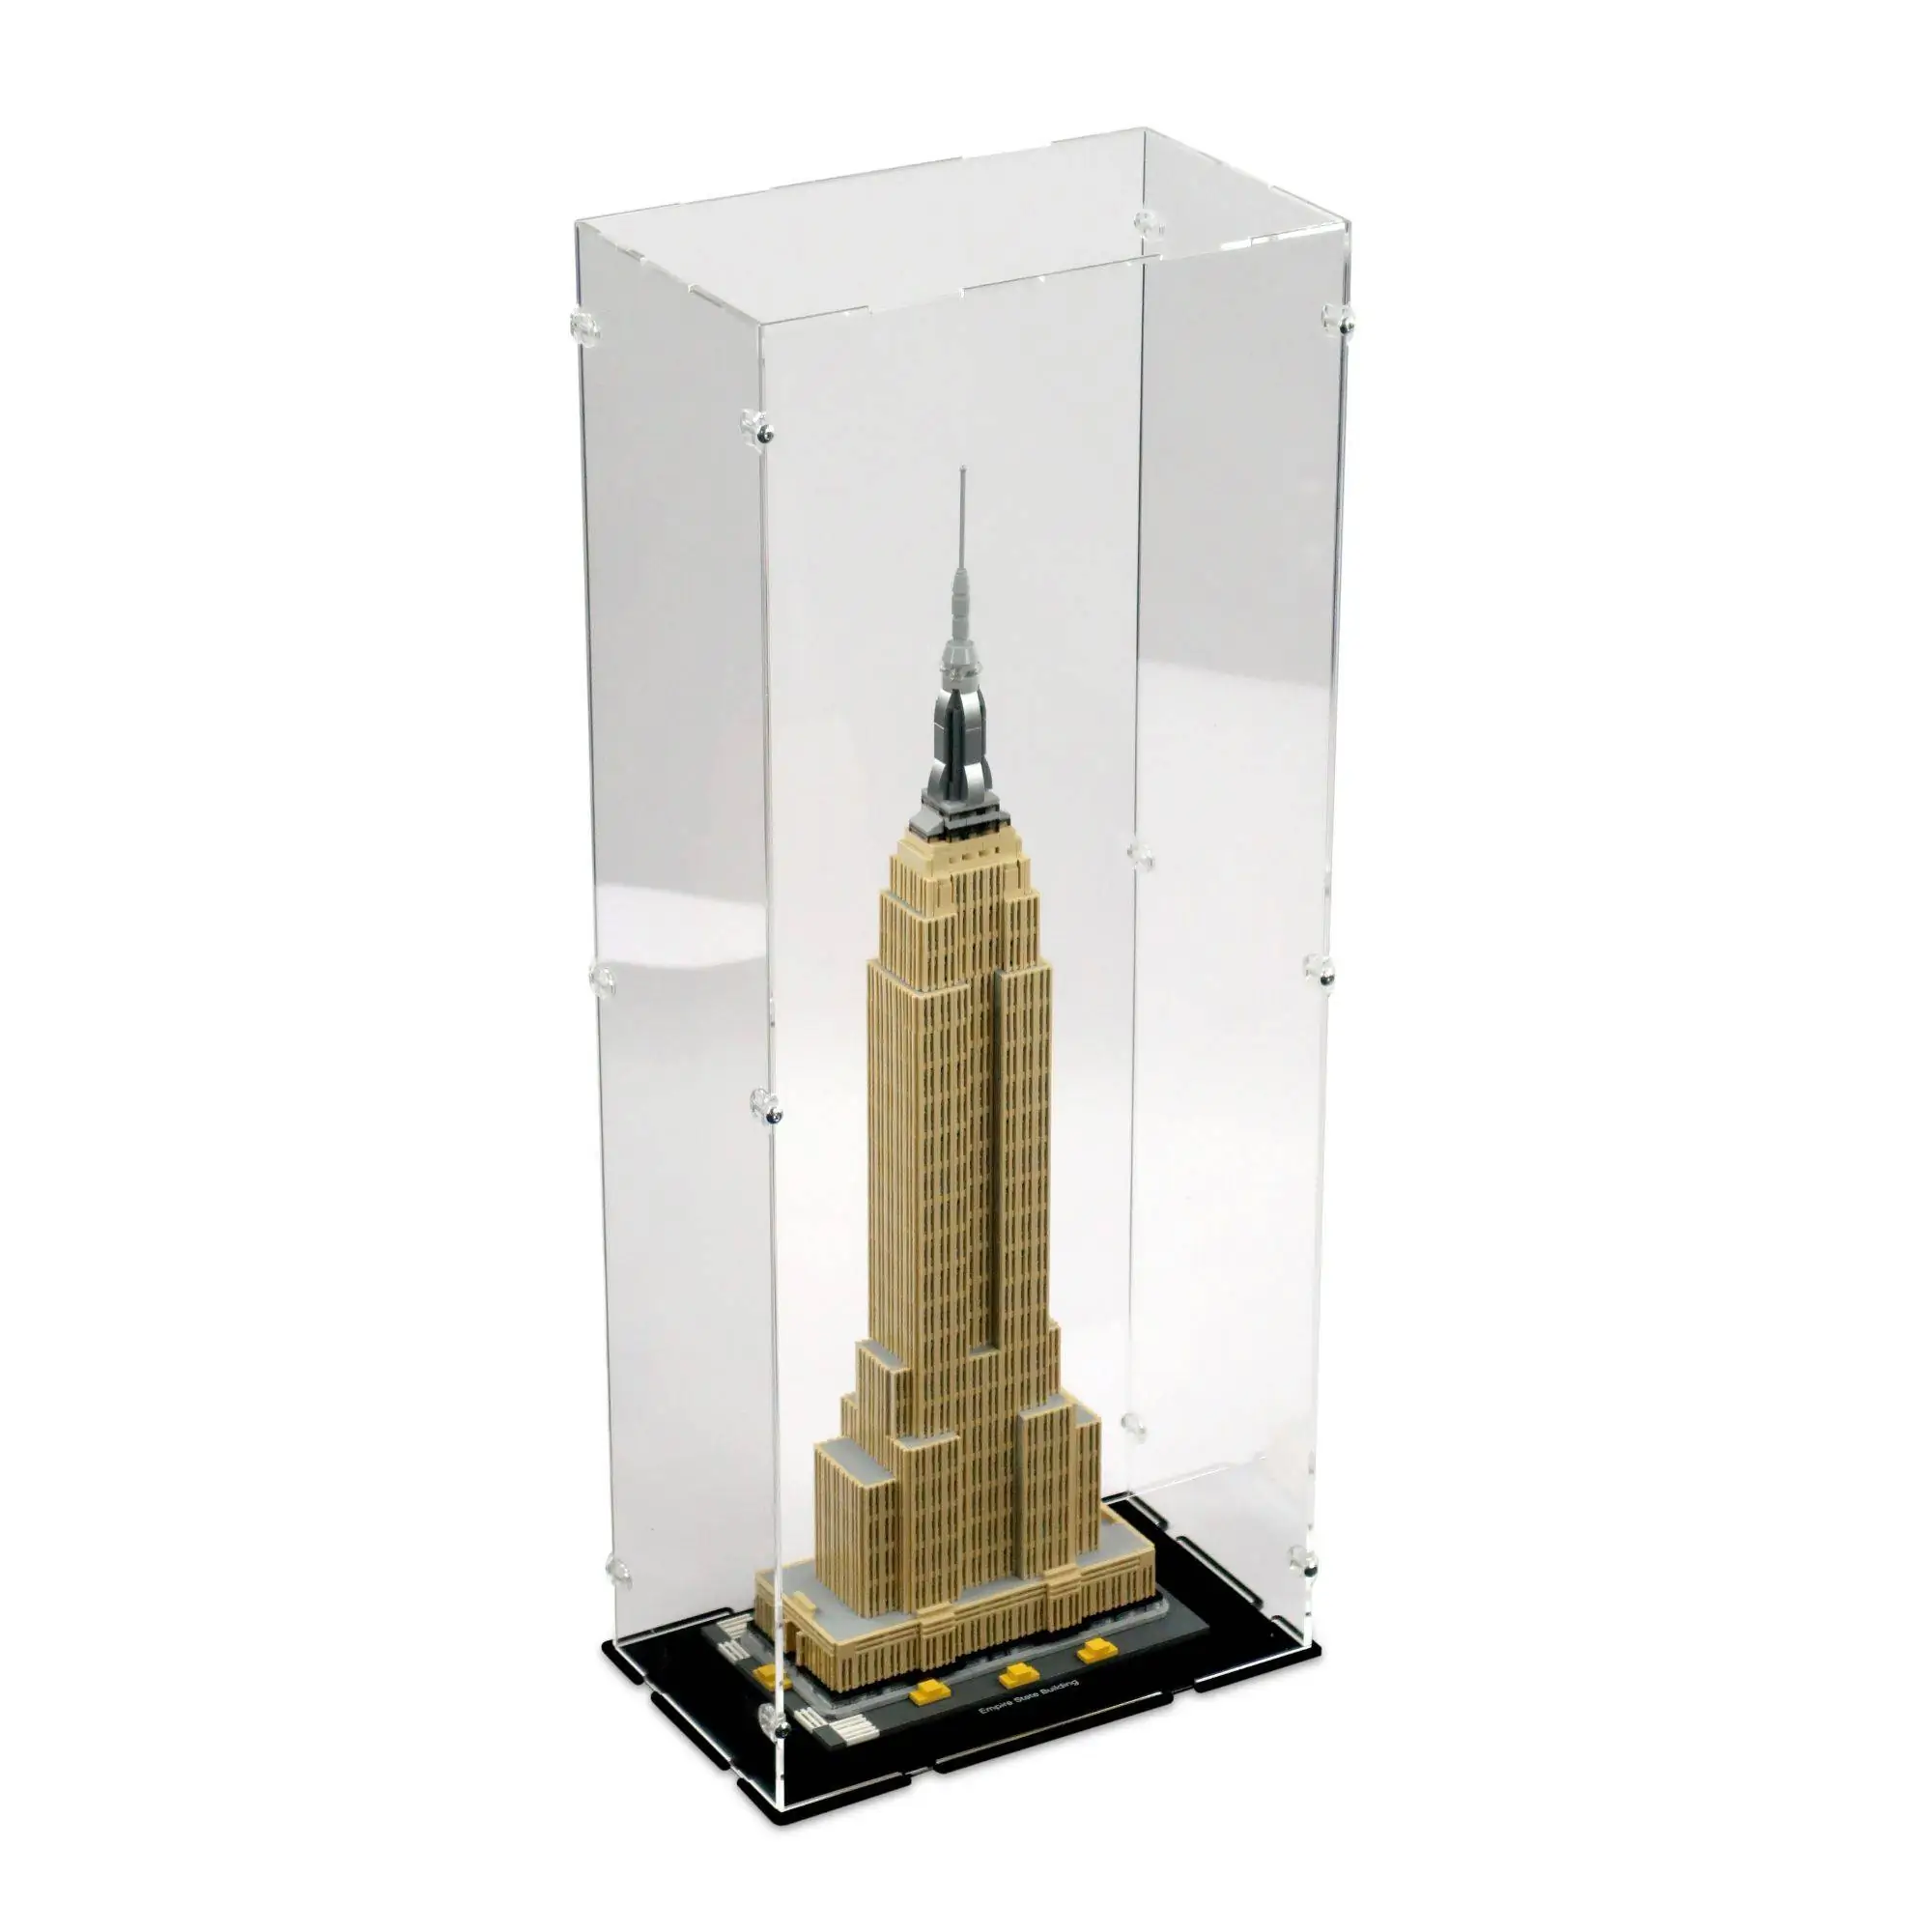 Acrylic Display Case LEGO Empire State Building | iDisplayit